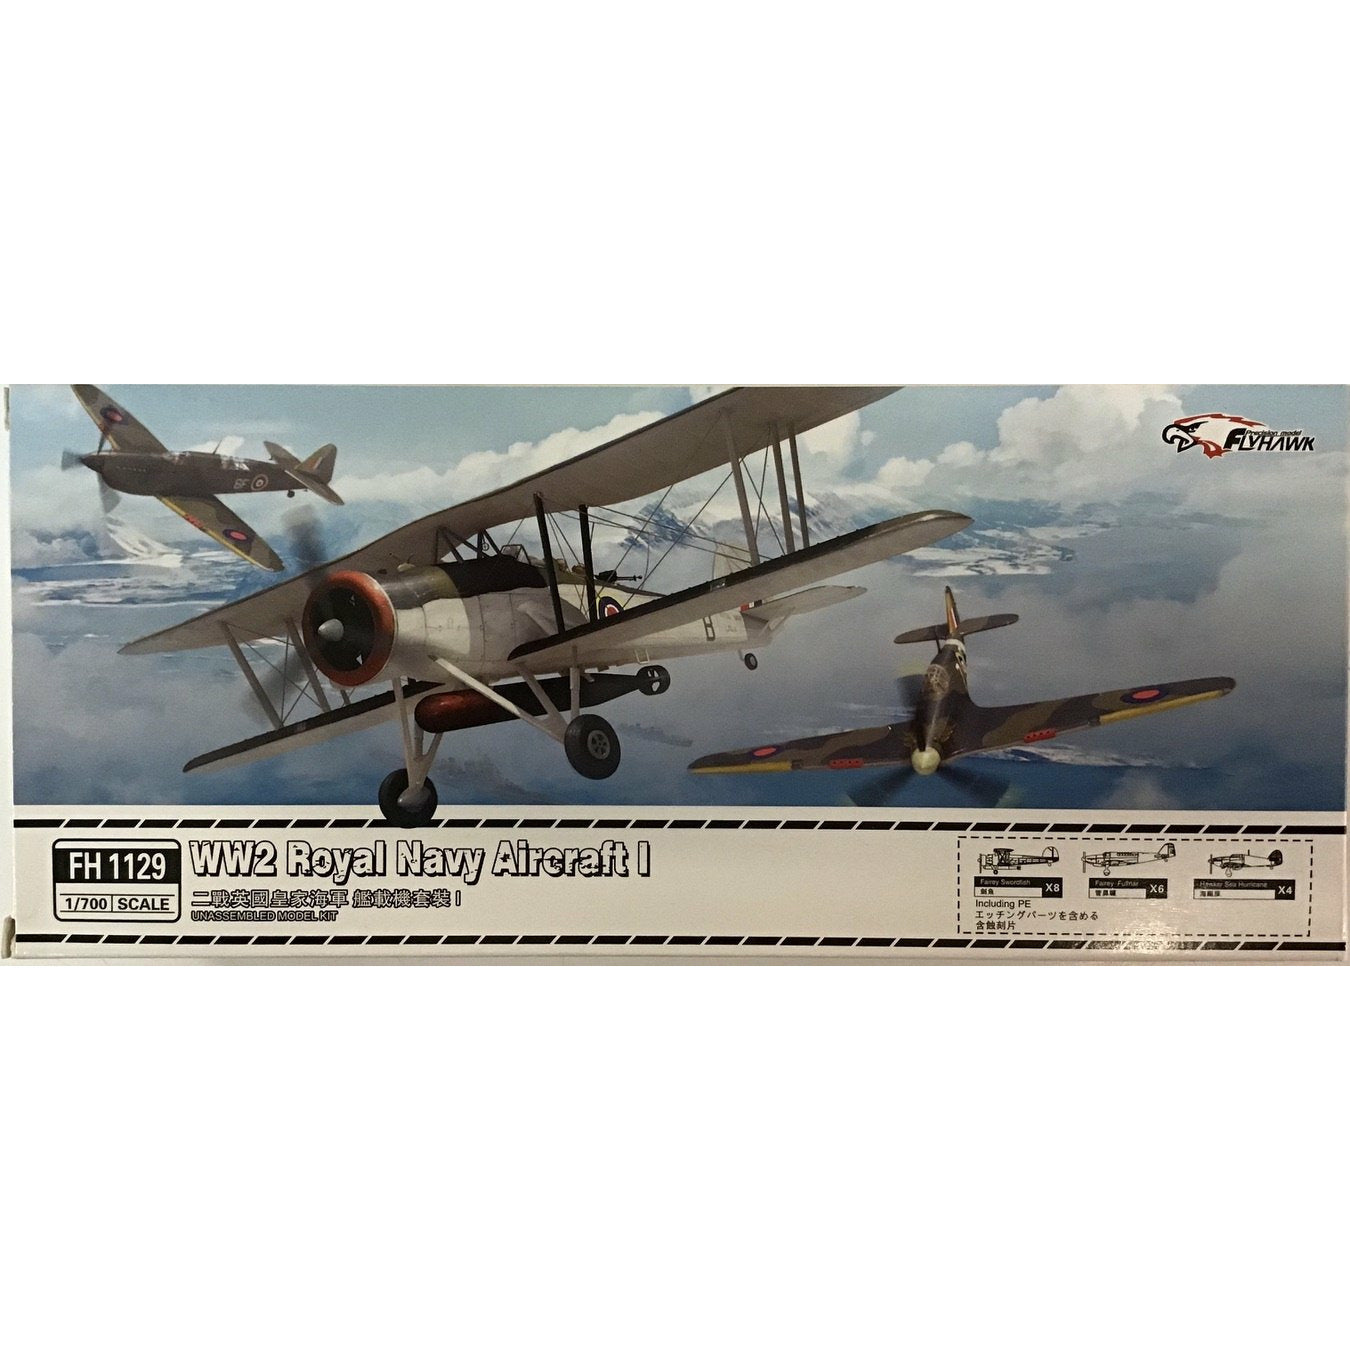 WWII Royal Aircraft Aircraft I 1/700 Model Ship Kit #1129 by Flyhawk